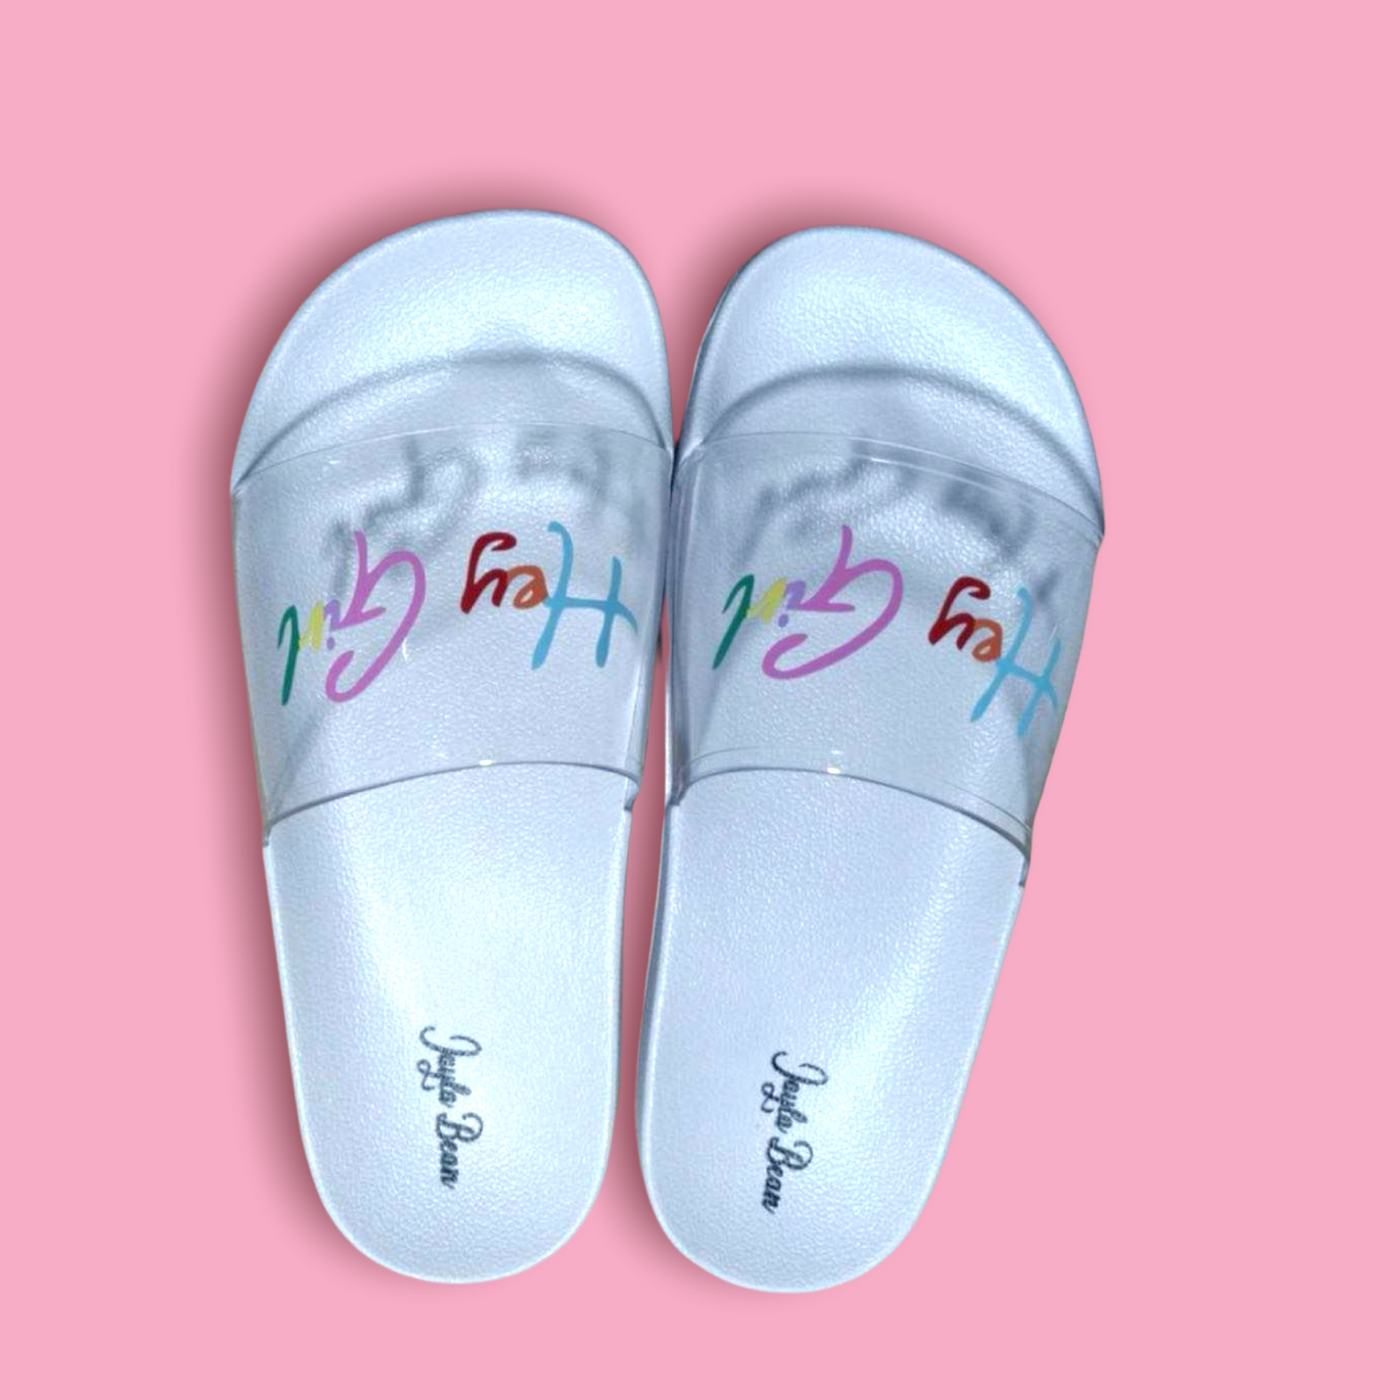 Jayla Bean “Hey Girl” Transparent Slides